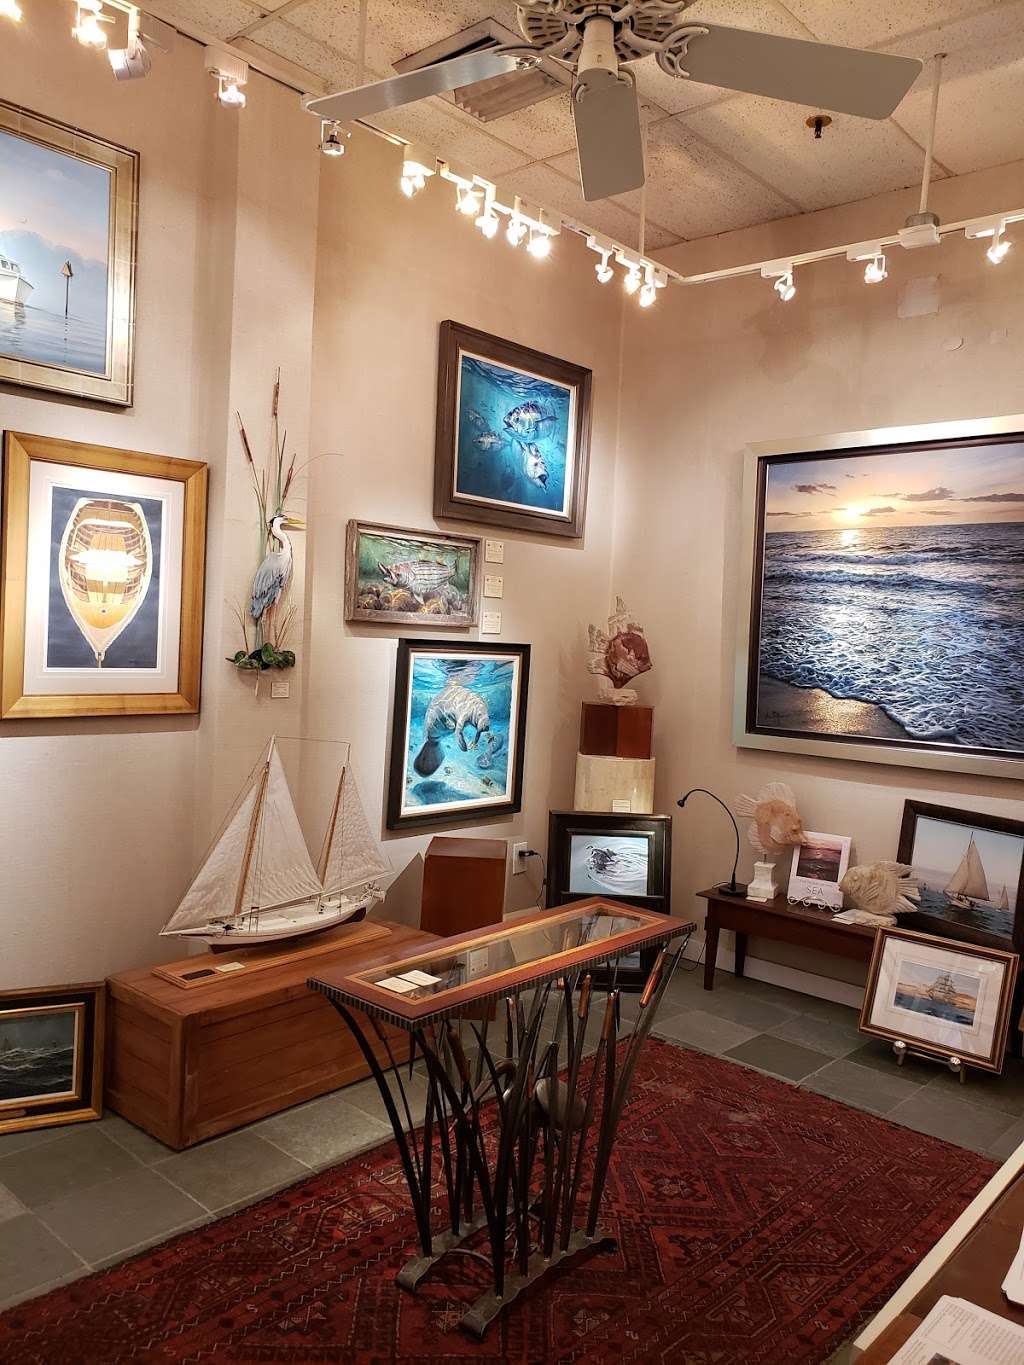 Annapolis Marine Art Gallery | 110 Dock St, Annapolis, MD 21401, USA | Phone: (410) 263-4100